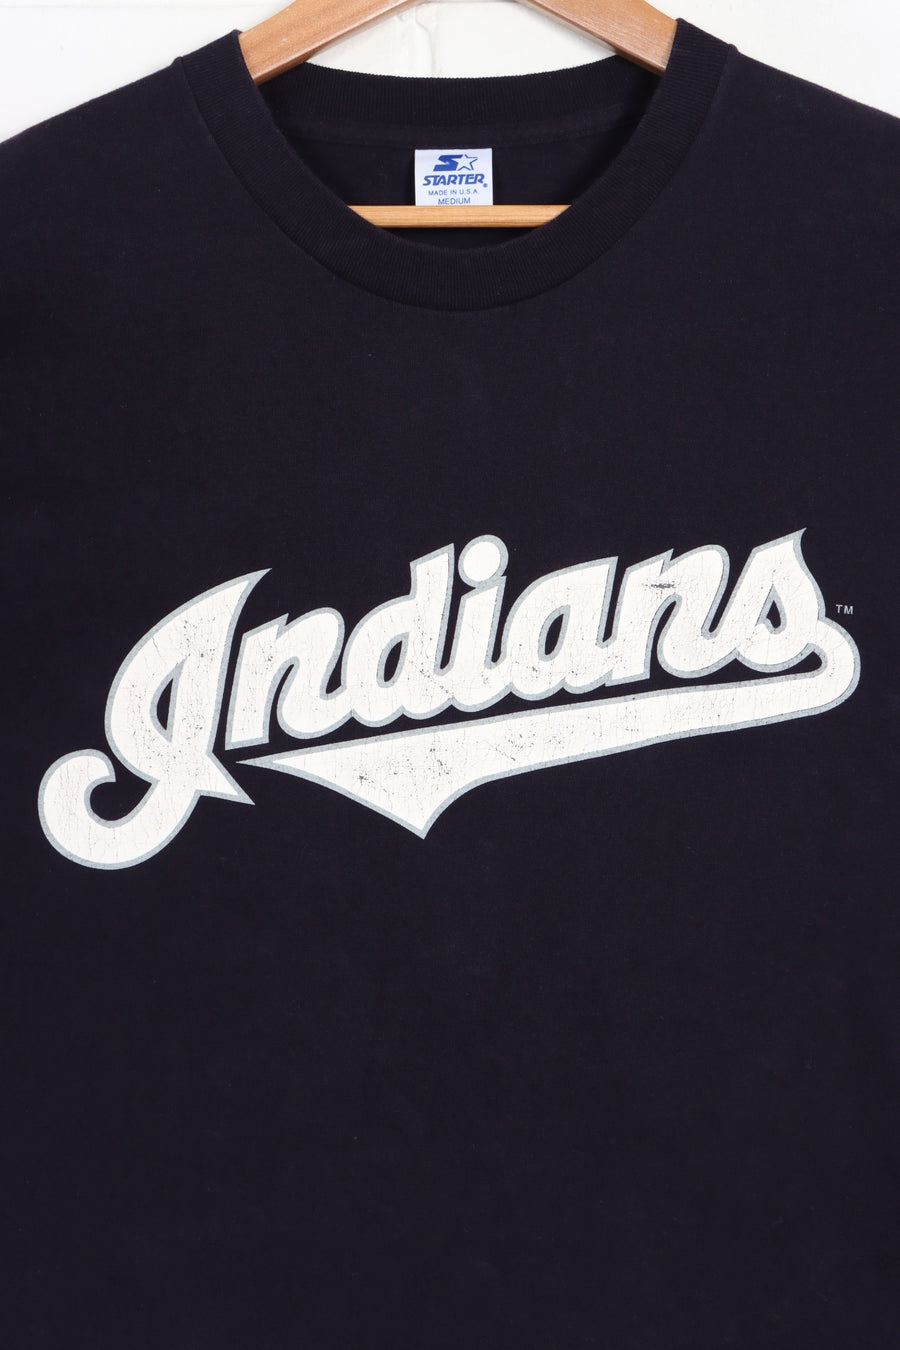 MLB Cleveland Indians Dark Navy Blue STARTER Tee USA Made (L)